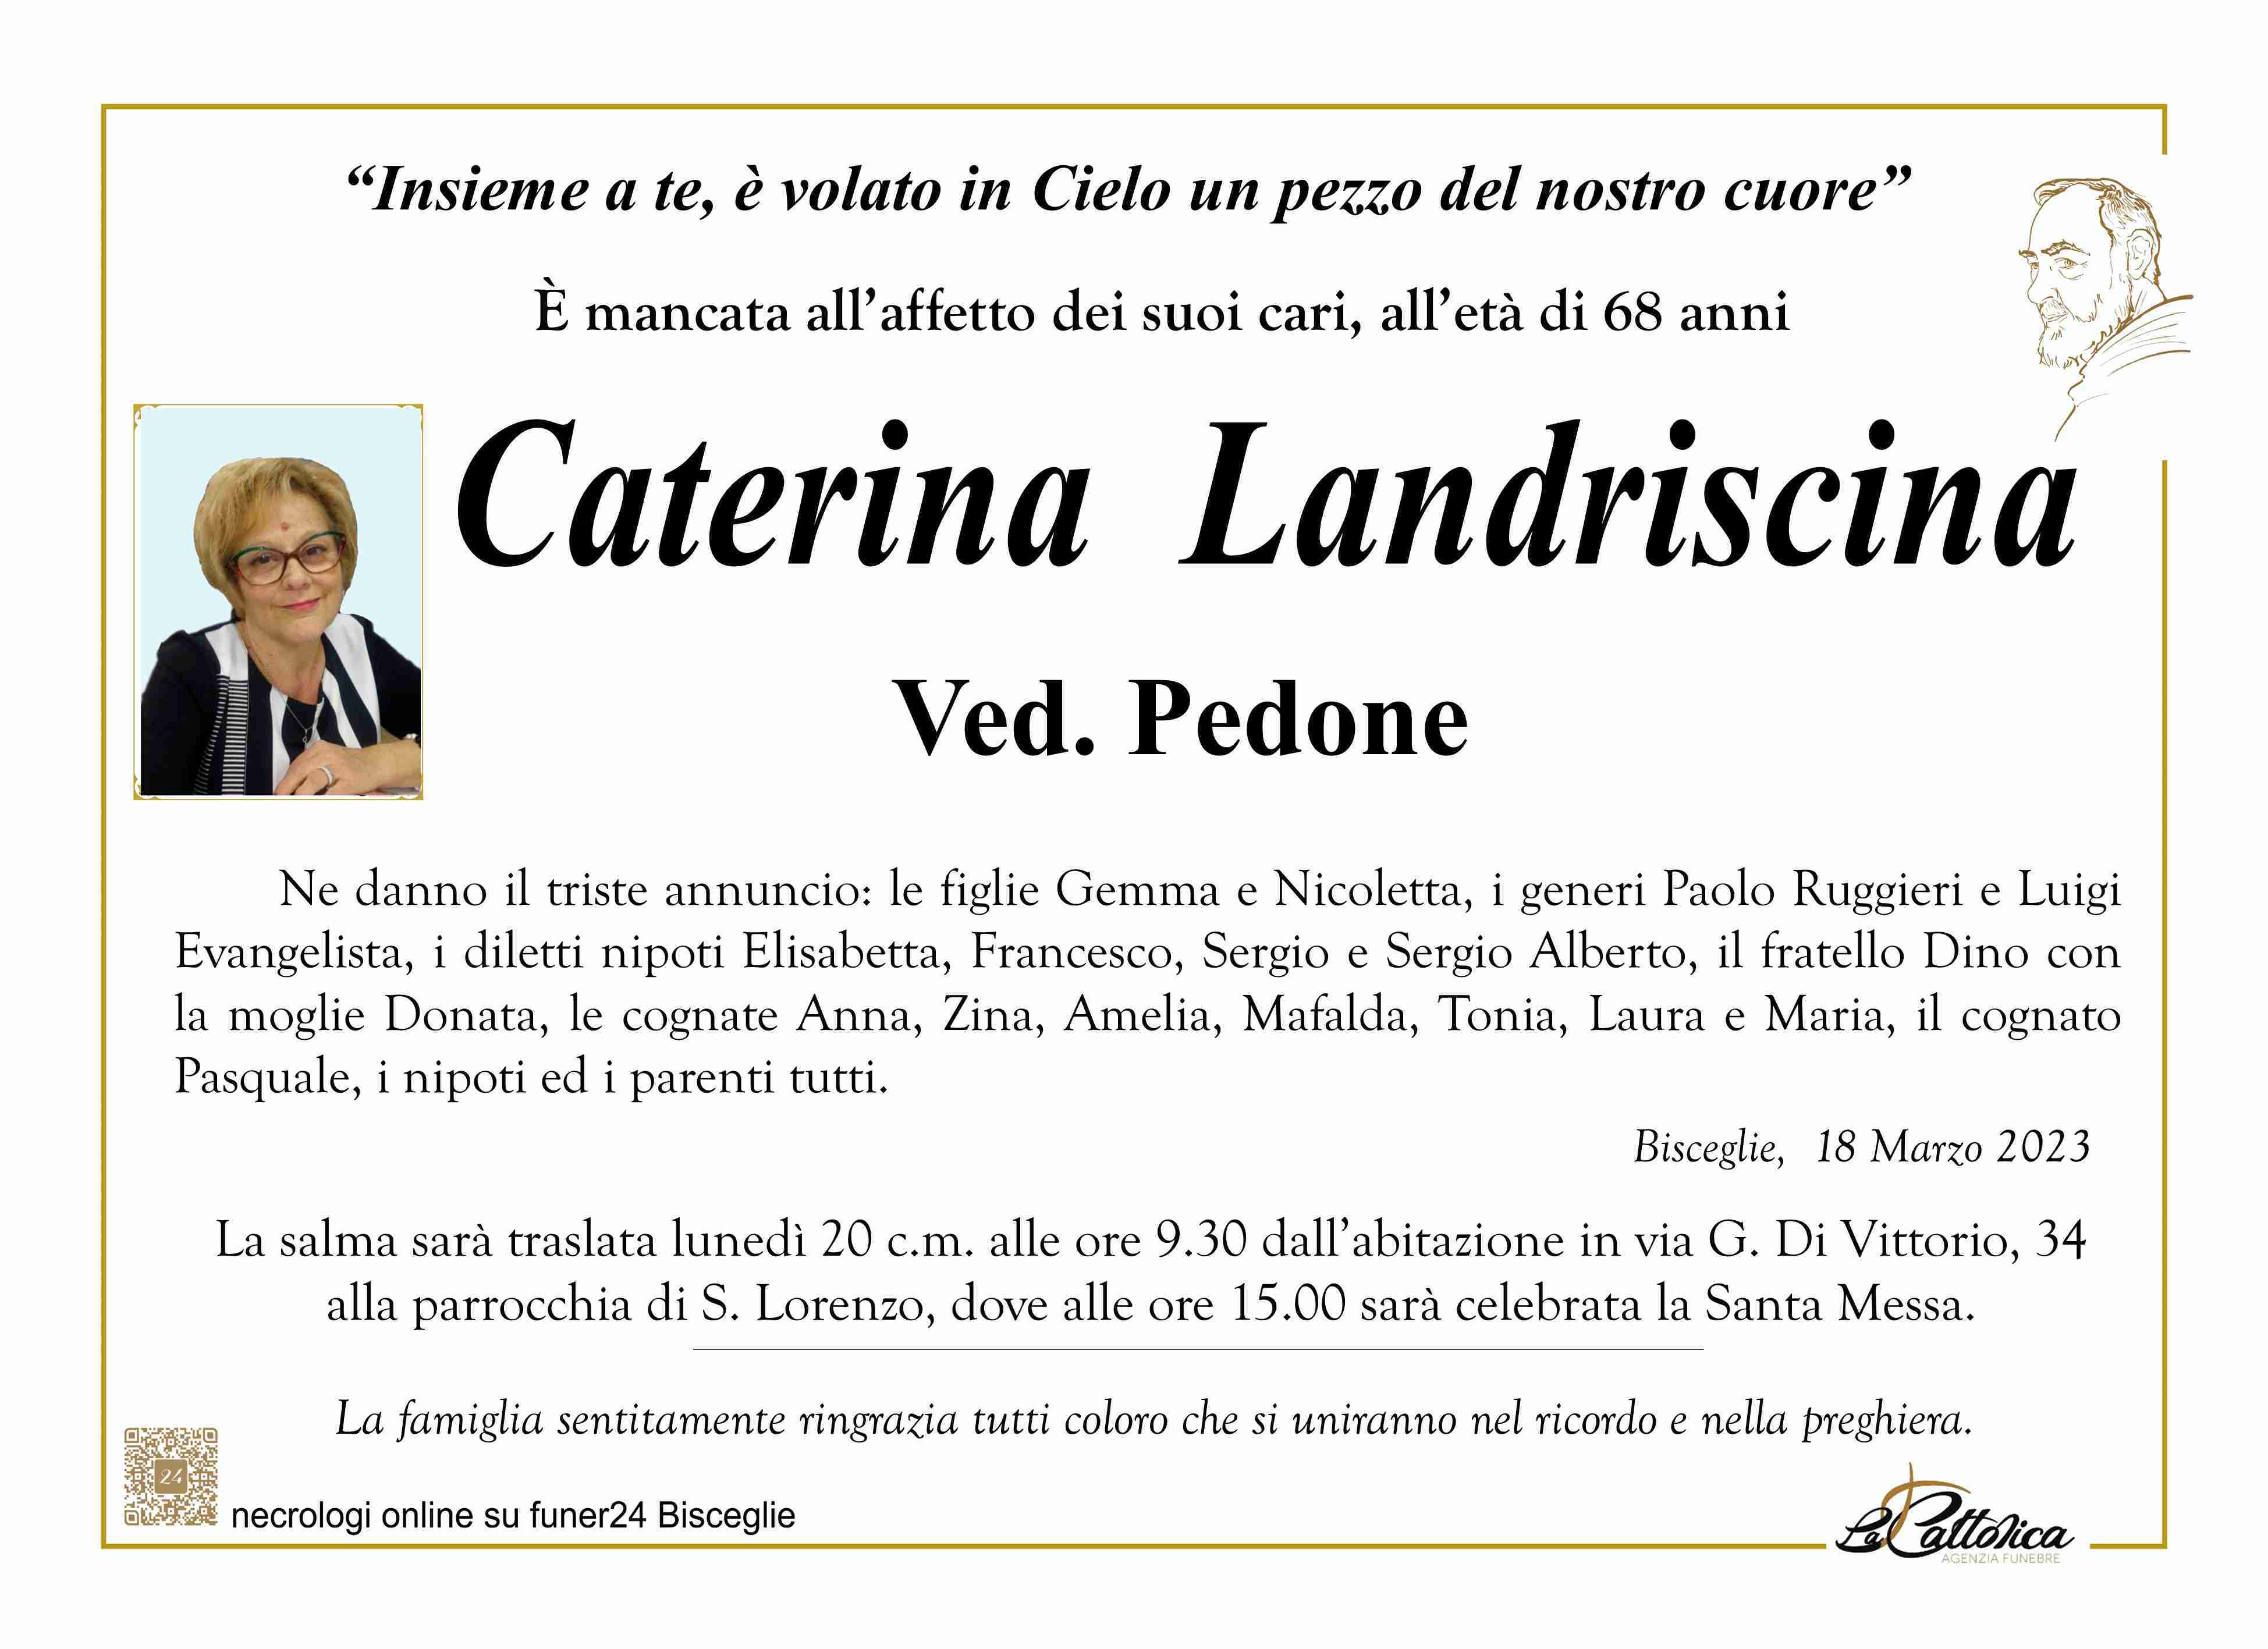 Caterina Landriscina